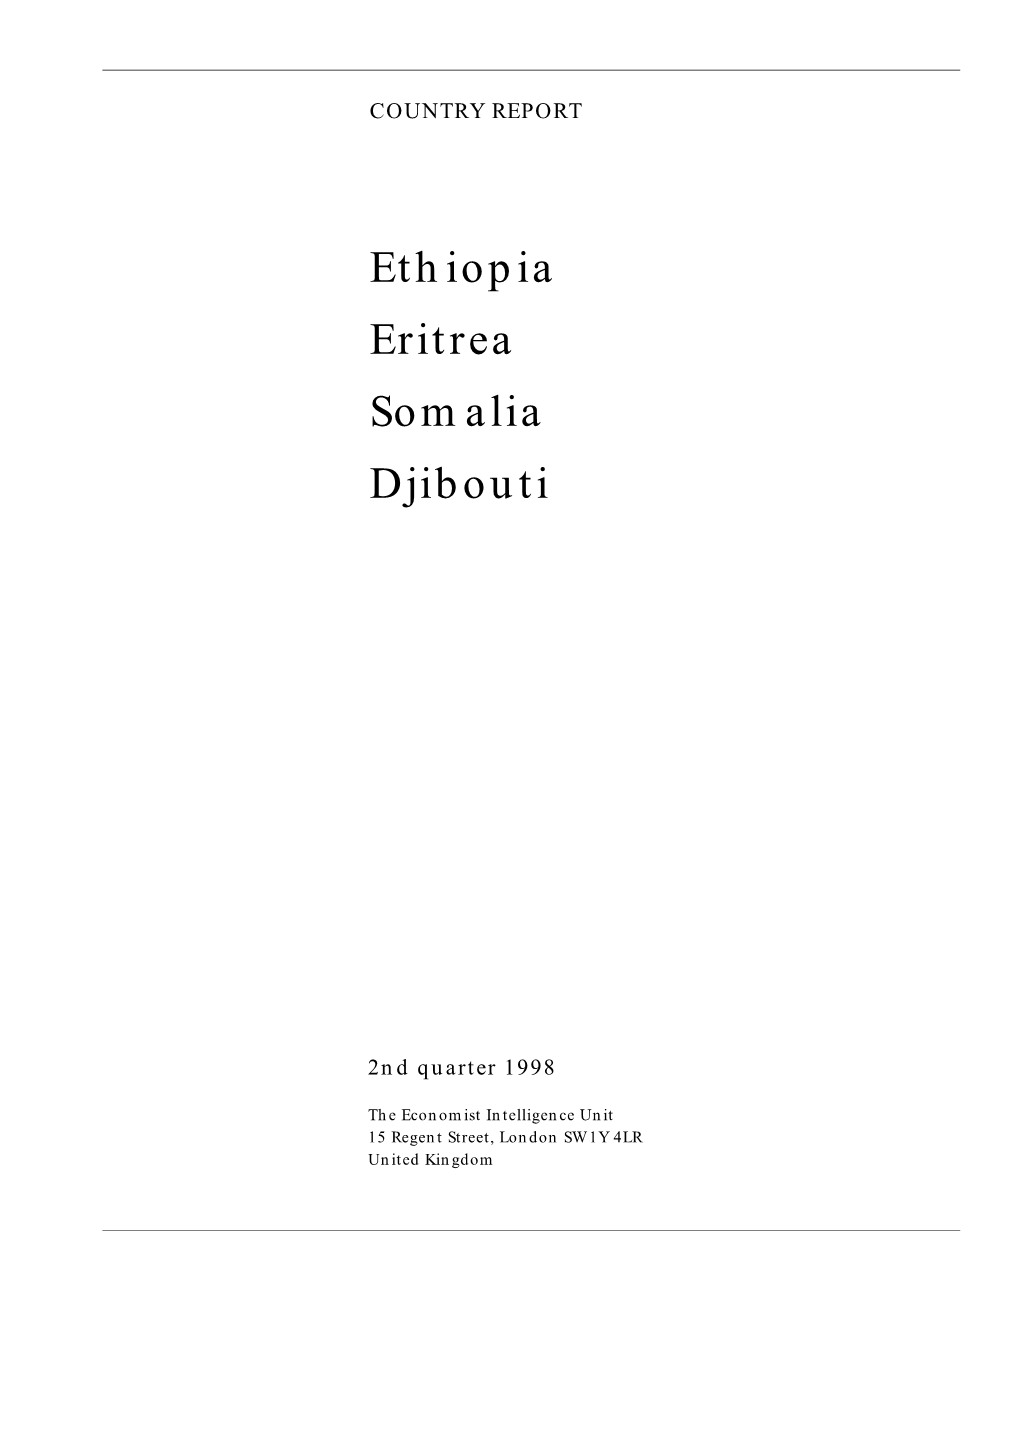 Ethiopia Eritrea Somalia Djibouti